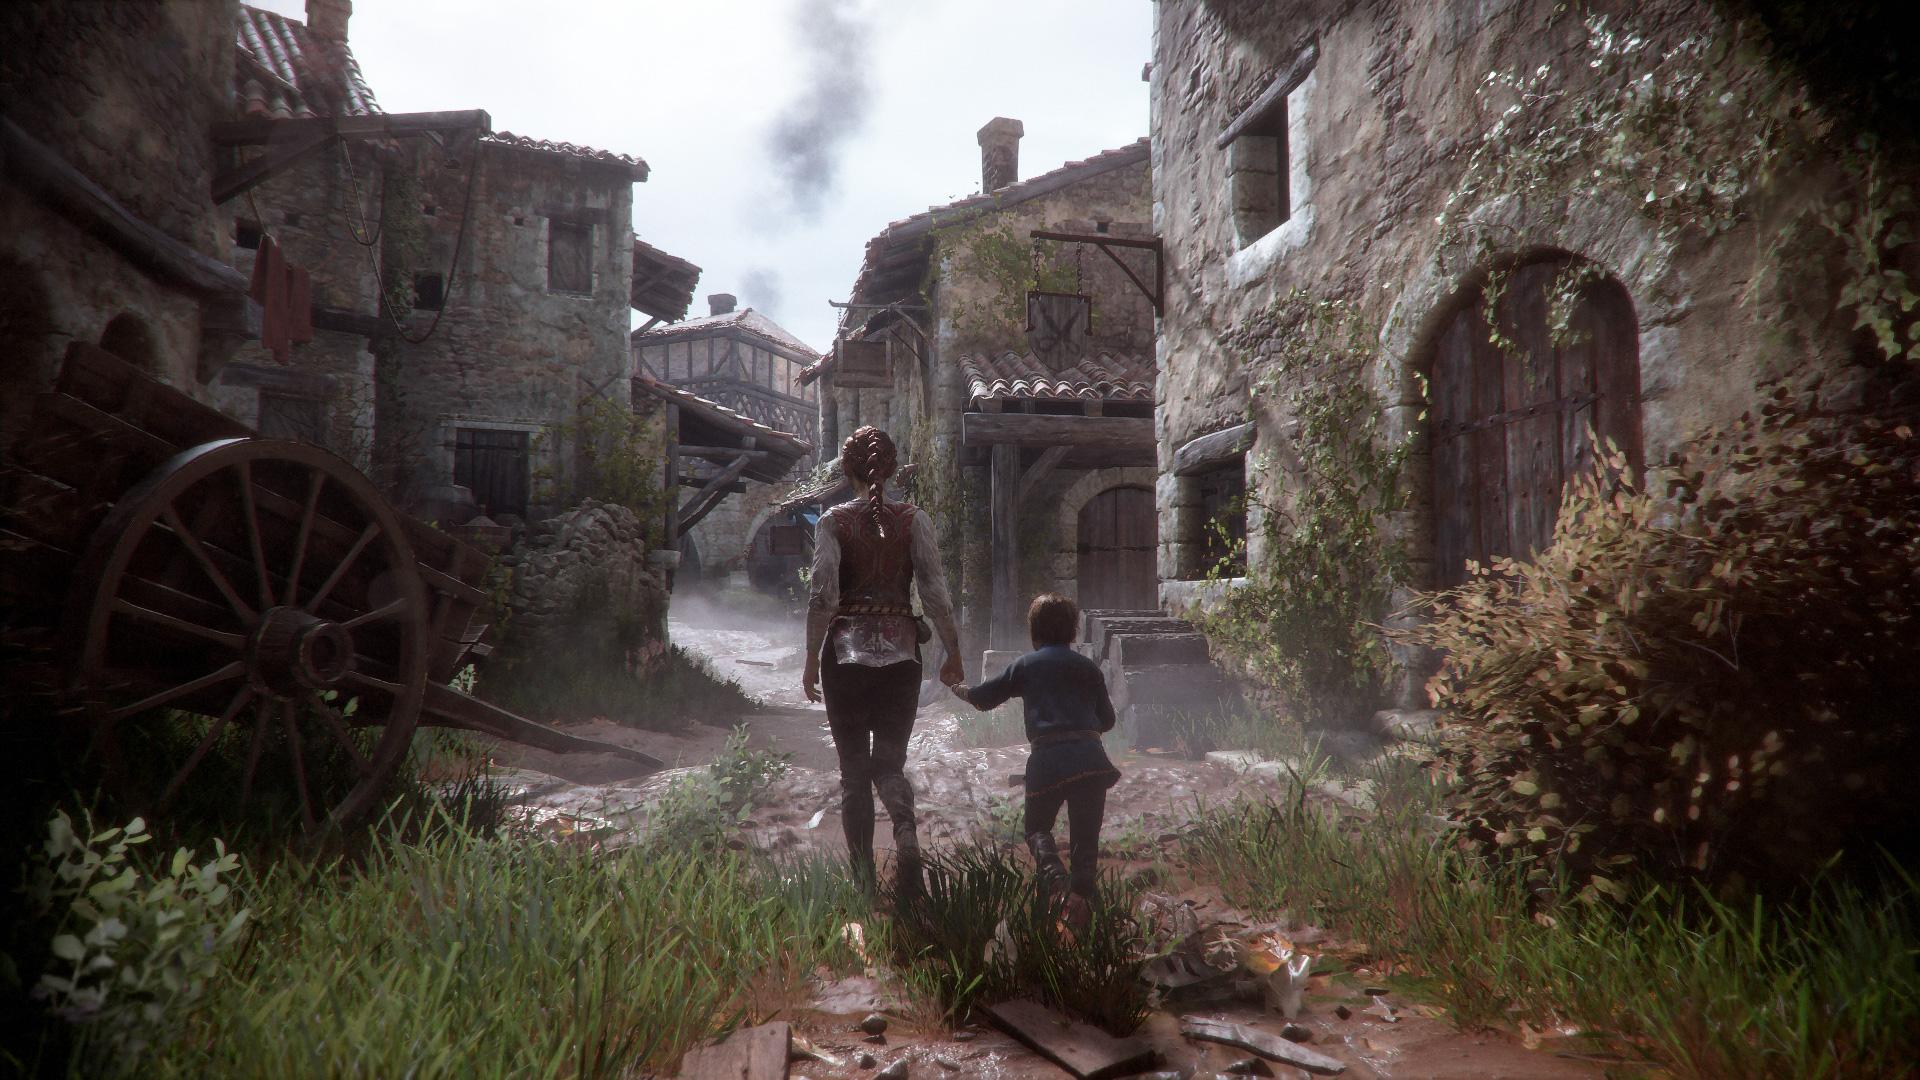 Screenshot №2 from game A Plague Tale: Innocence